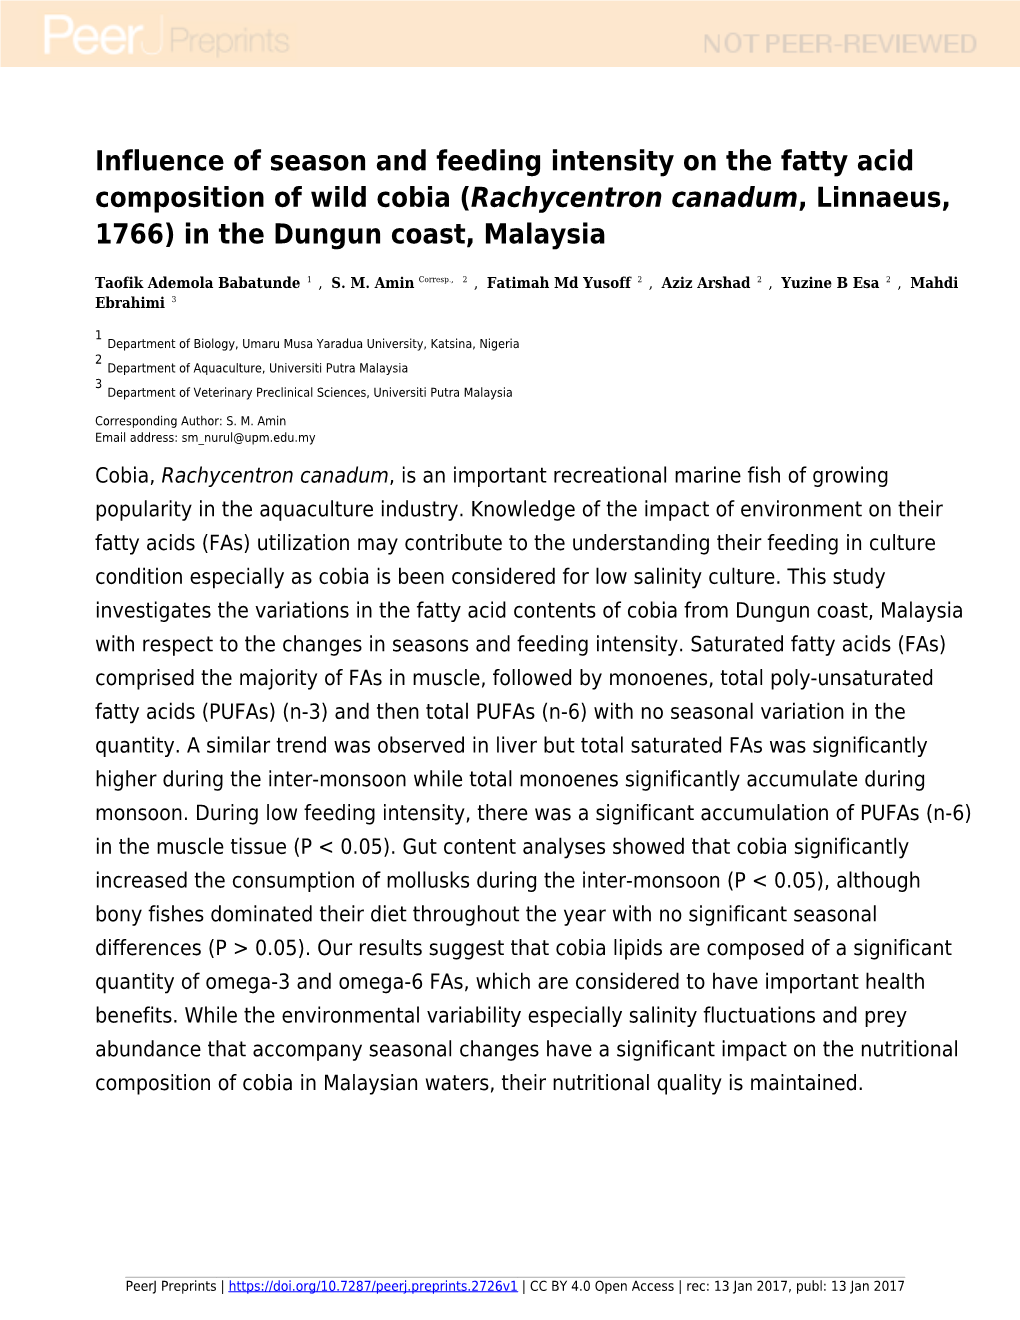 Influence of Season and Feeding Intensity on the Fatty Acid Composition of Wild Cobia (Rachycentron Canadum, Linnaeus, 1766) in the Dungun Coast, Malaysia